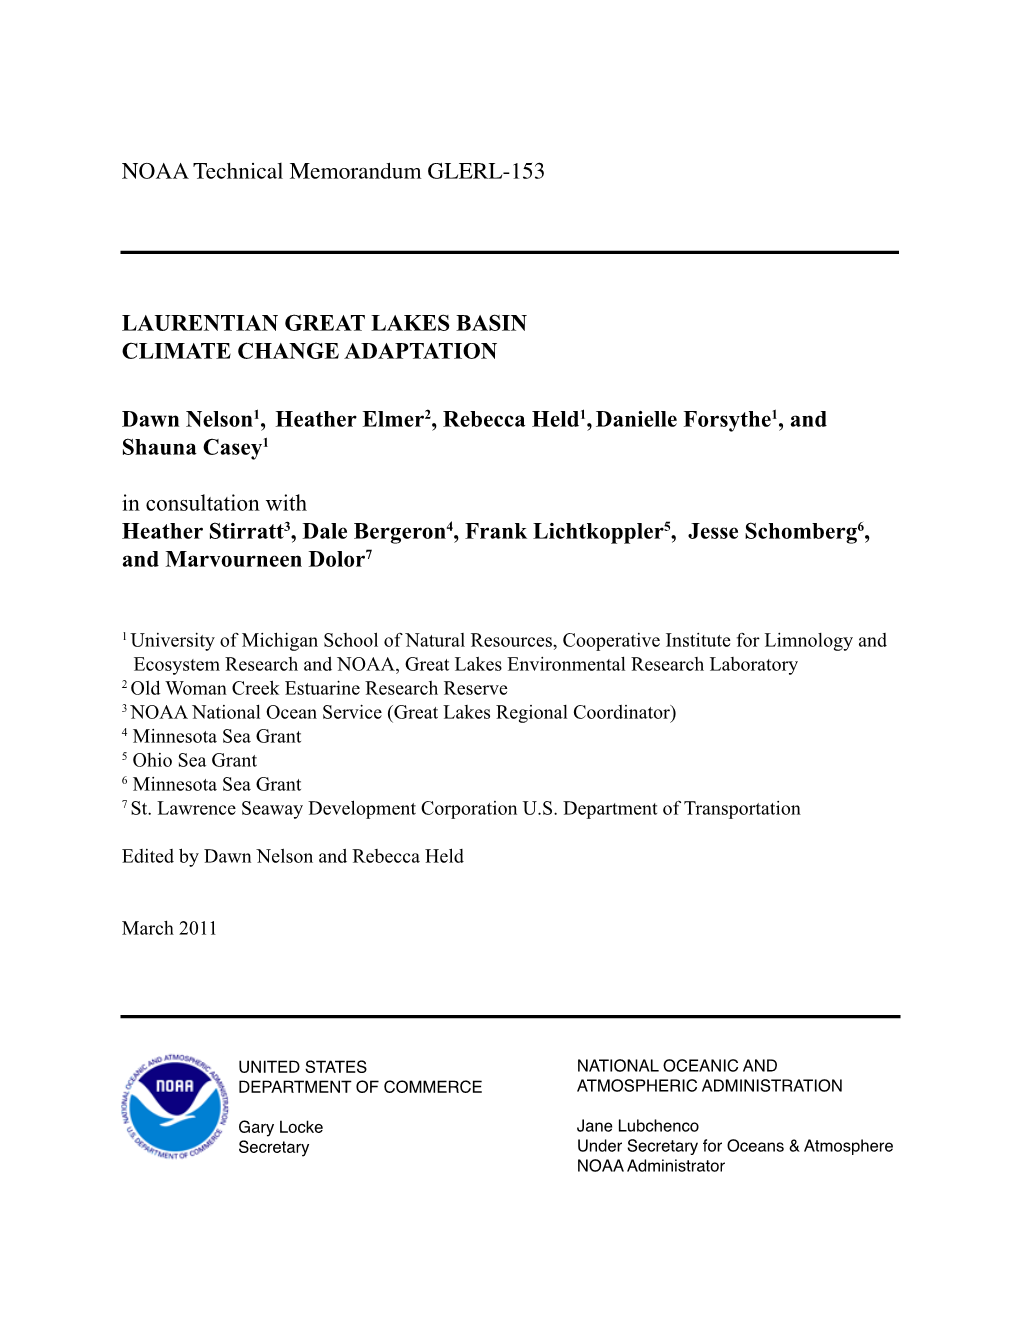 NOAA Technical Memorandum GLERL-153 LAURENTIAN GREAT